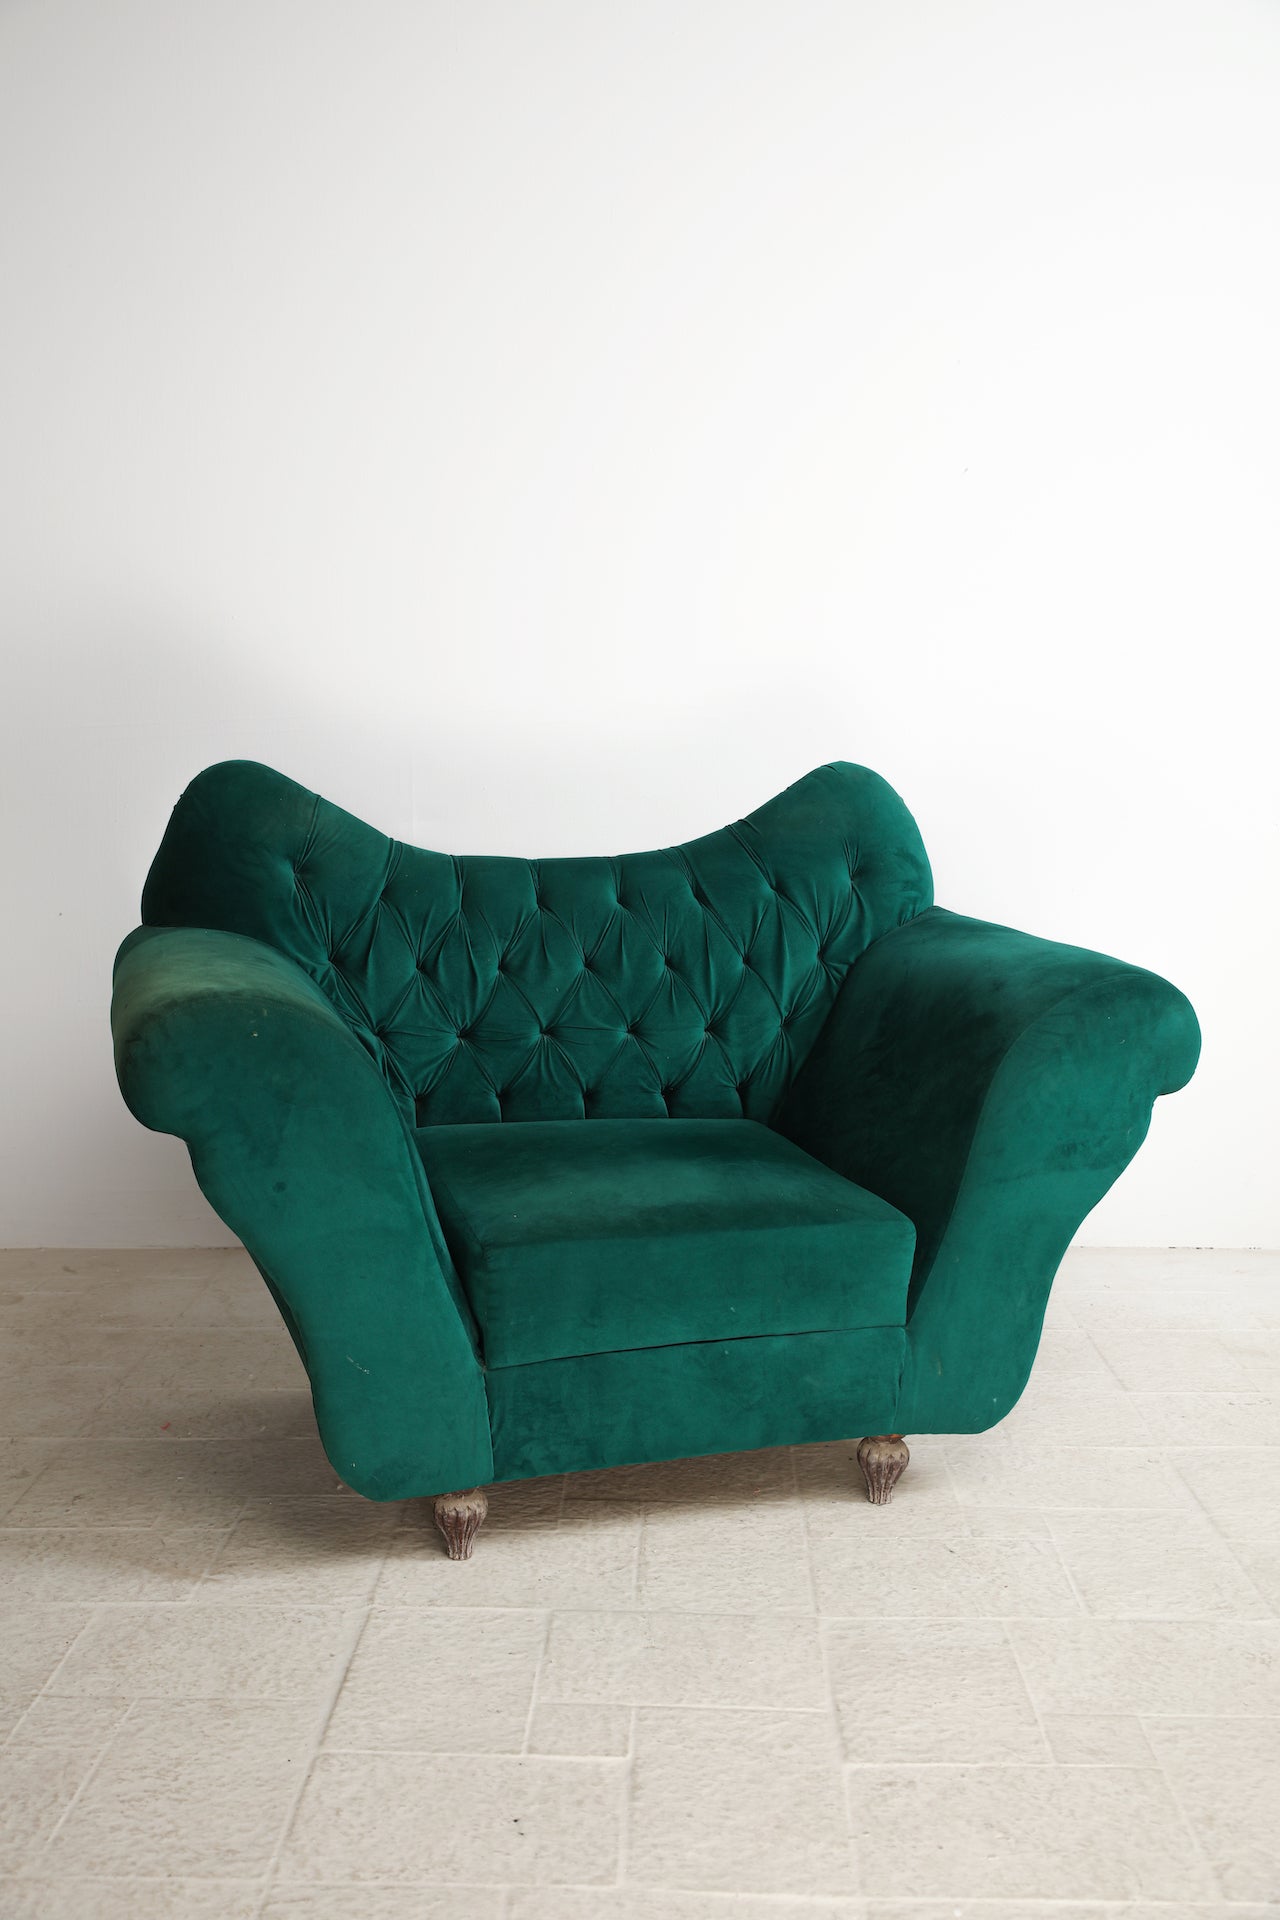 Chesterfield Green Sofa